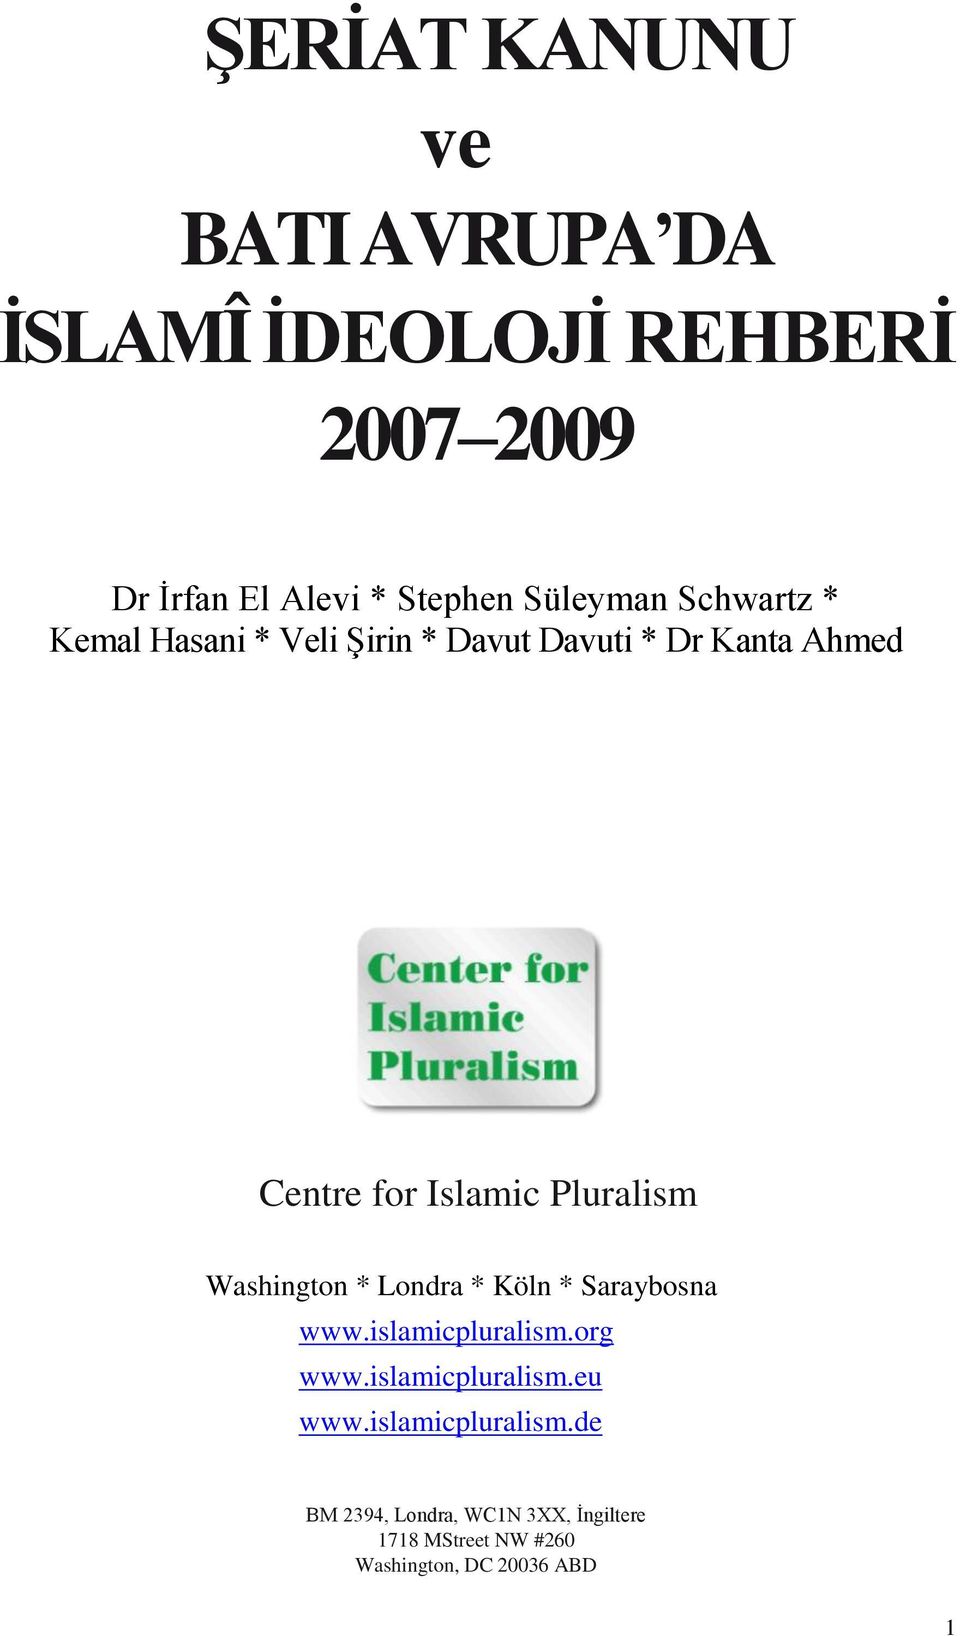 Pluralism Washington * Londra * Köln * Saraybosna www.islamicpluralism.org www.islamicpluralism.eu www.